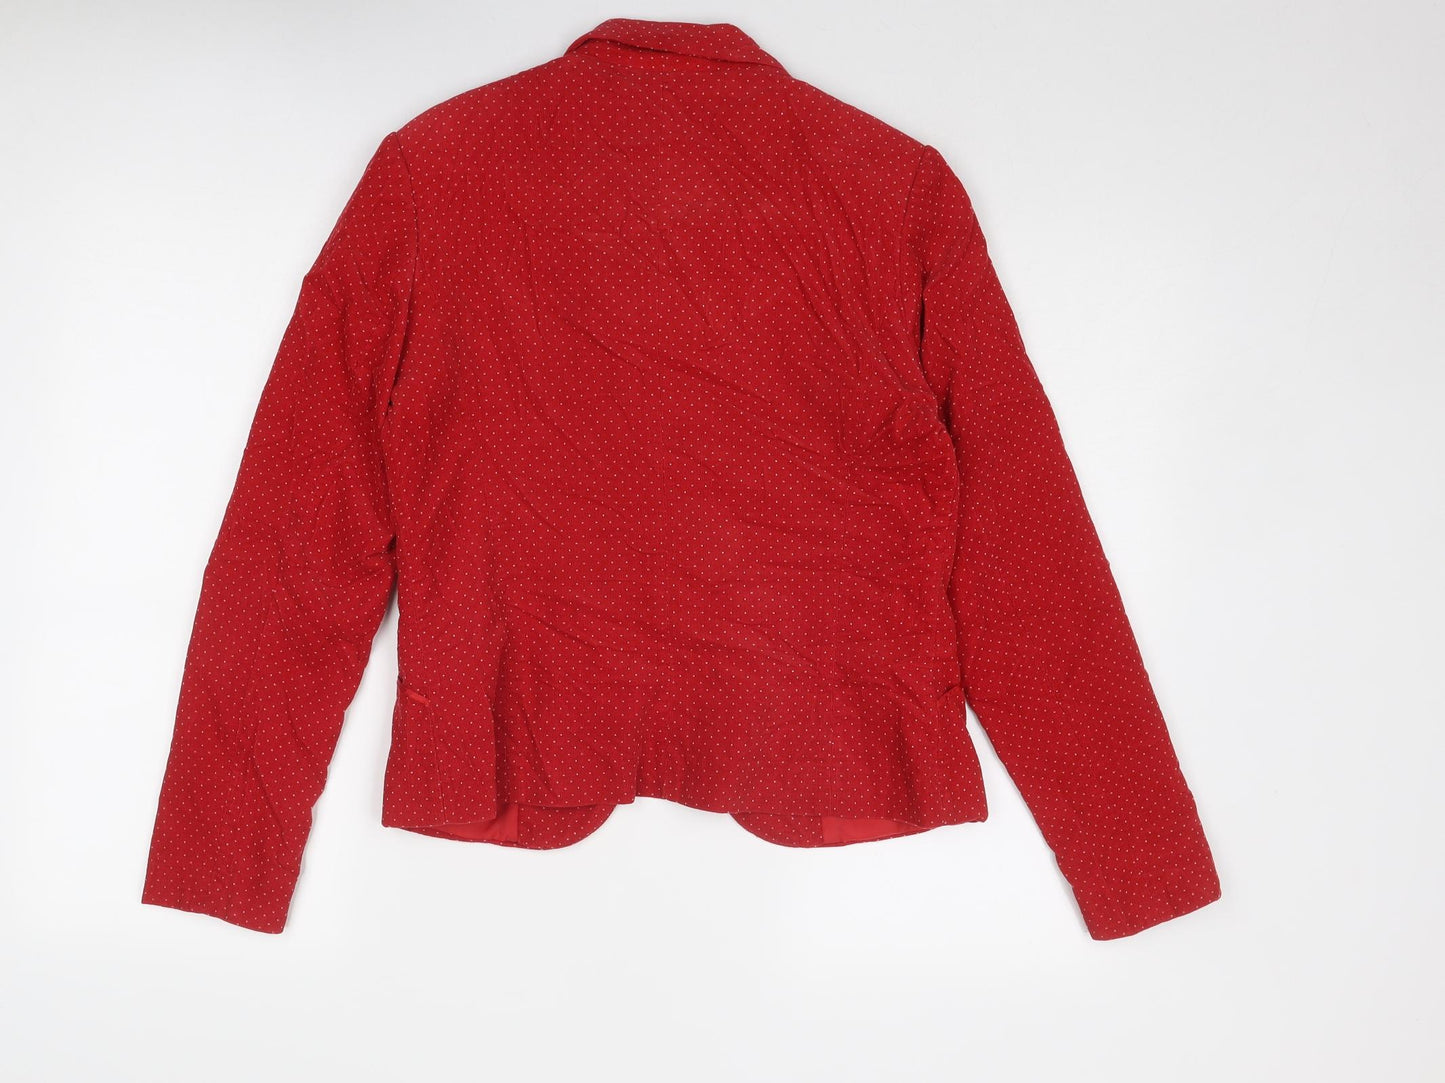 H&M Womens Red Polka Dot Jacket Blazer Size 12 Hook & Eye - Tie Front